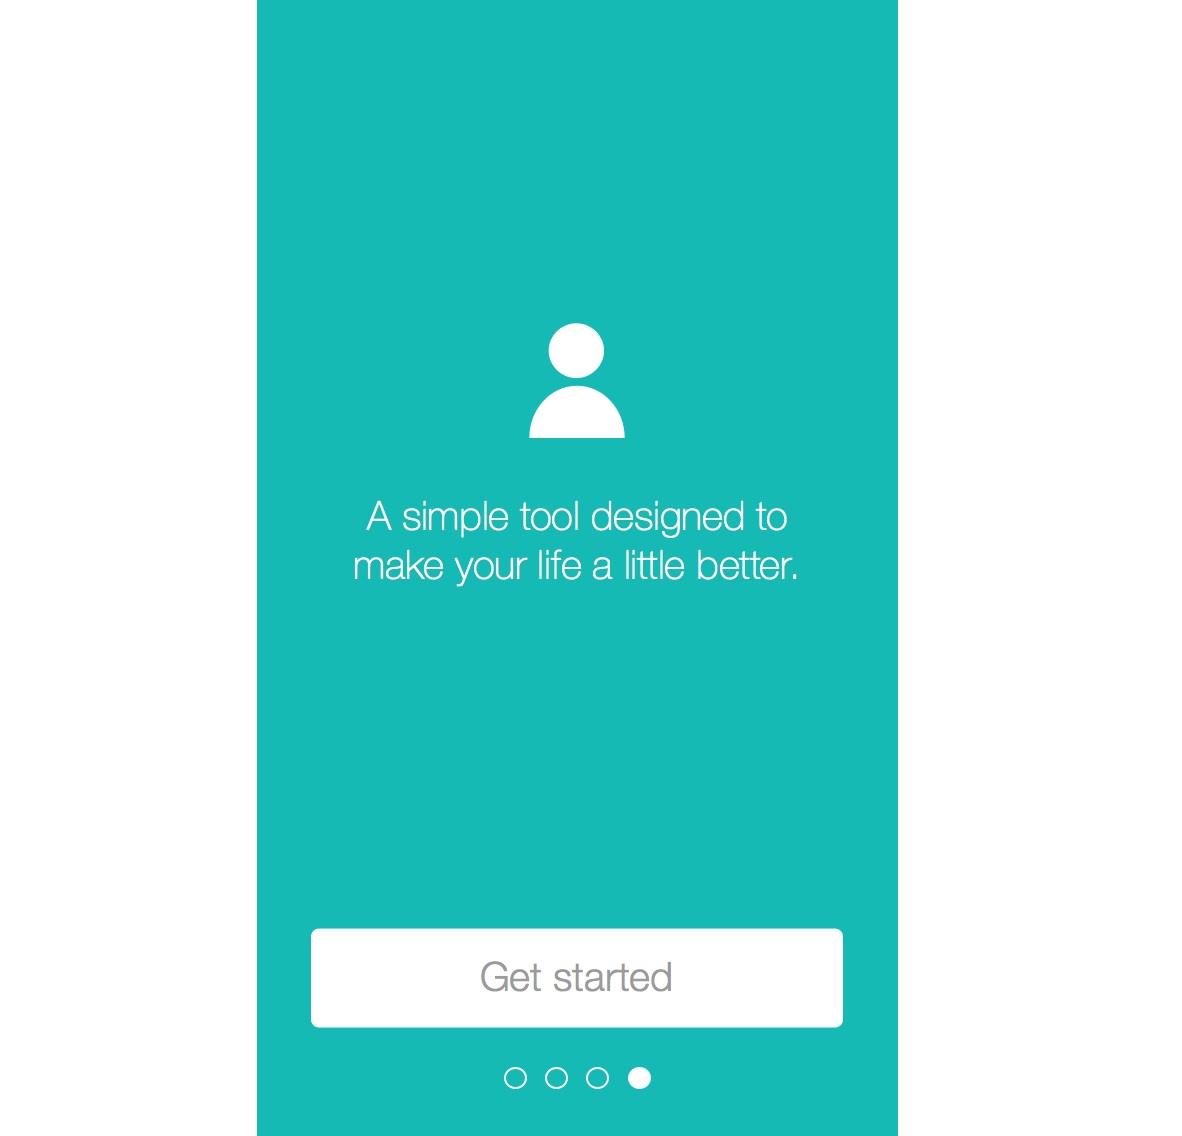 ux user experience user interface design human-centered design app design social network social app